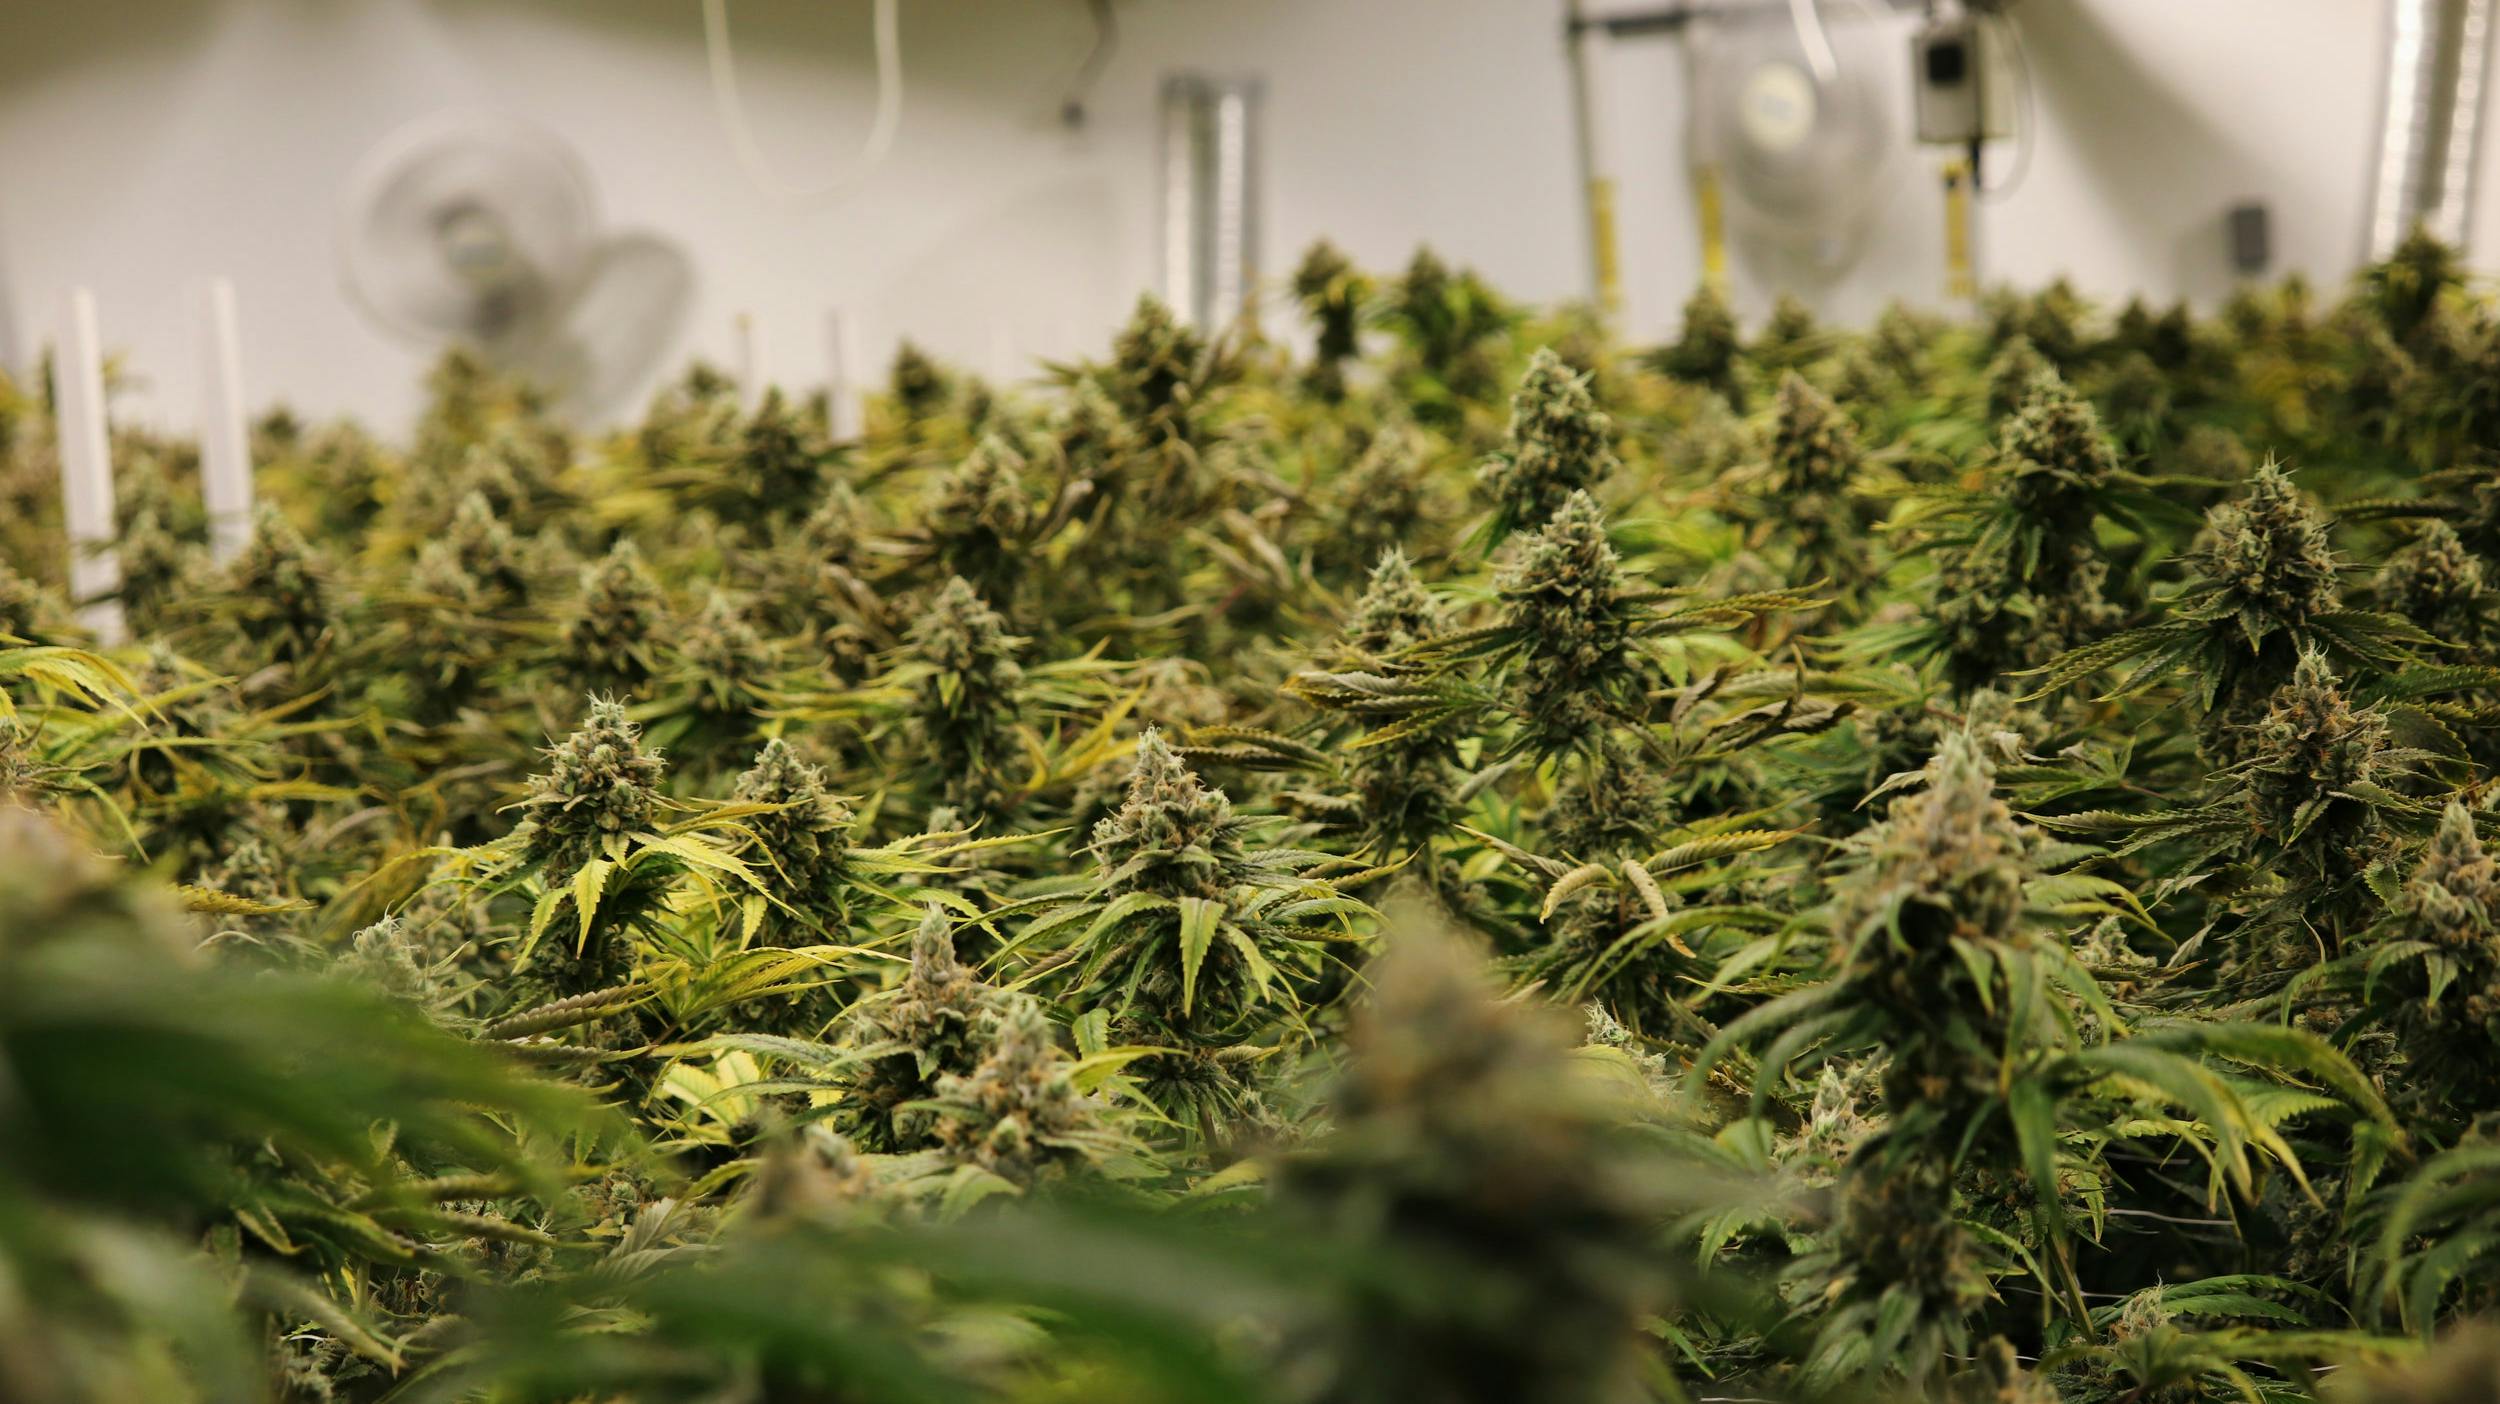 a field of cannabis plants inside an indoor marijuana grow facility